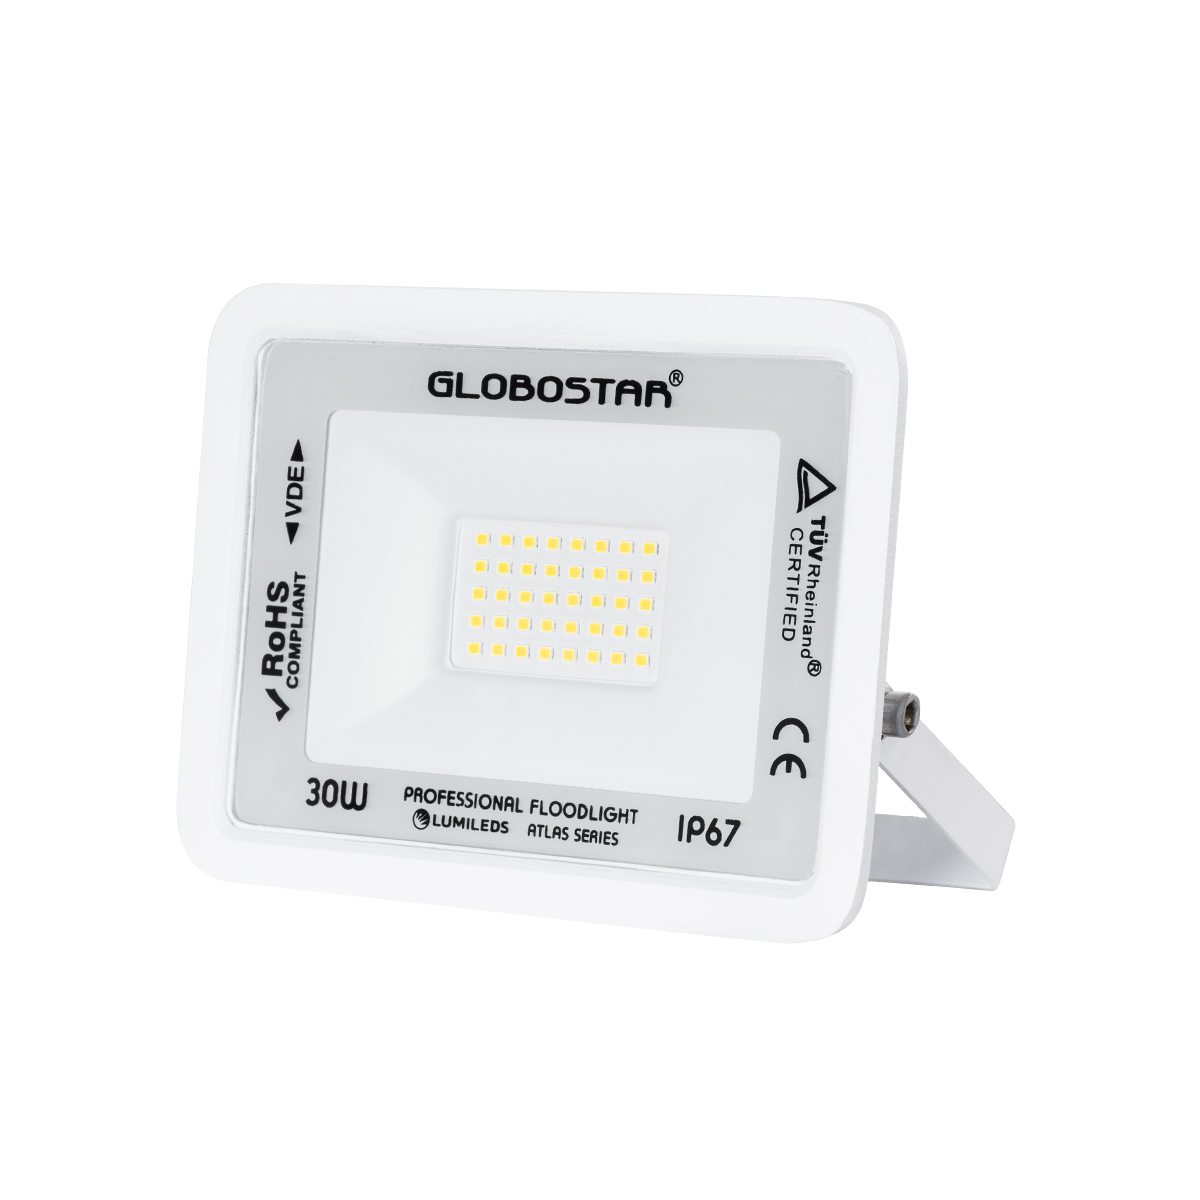 GloboStar® ATLAS 61414 Επαγγελματικός Προβολέας LED 30W 3600lm 120° AC 220-240V – Αδιάβροχος IP67 – Μ16 x Π2.5 x Υ12.5cm – Λευκό – Φυσικό Λευκό 4500K – LUMILEDS Chips – TÜV Rheinland Certified – 5 Years Warranty